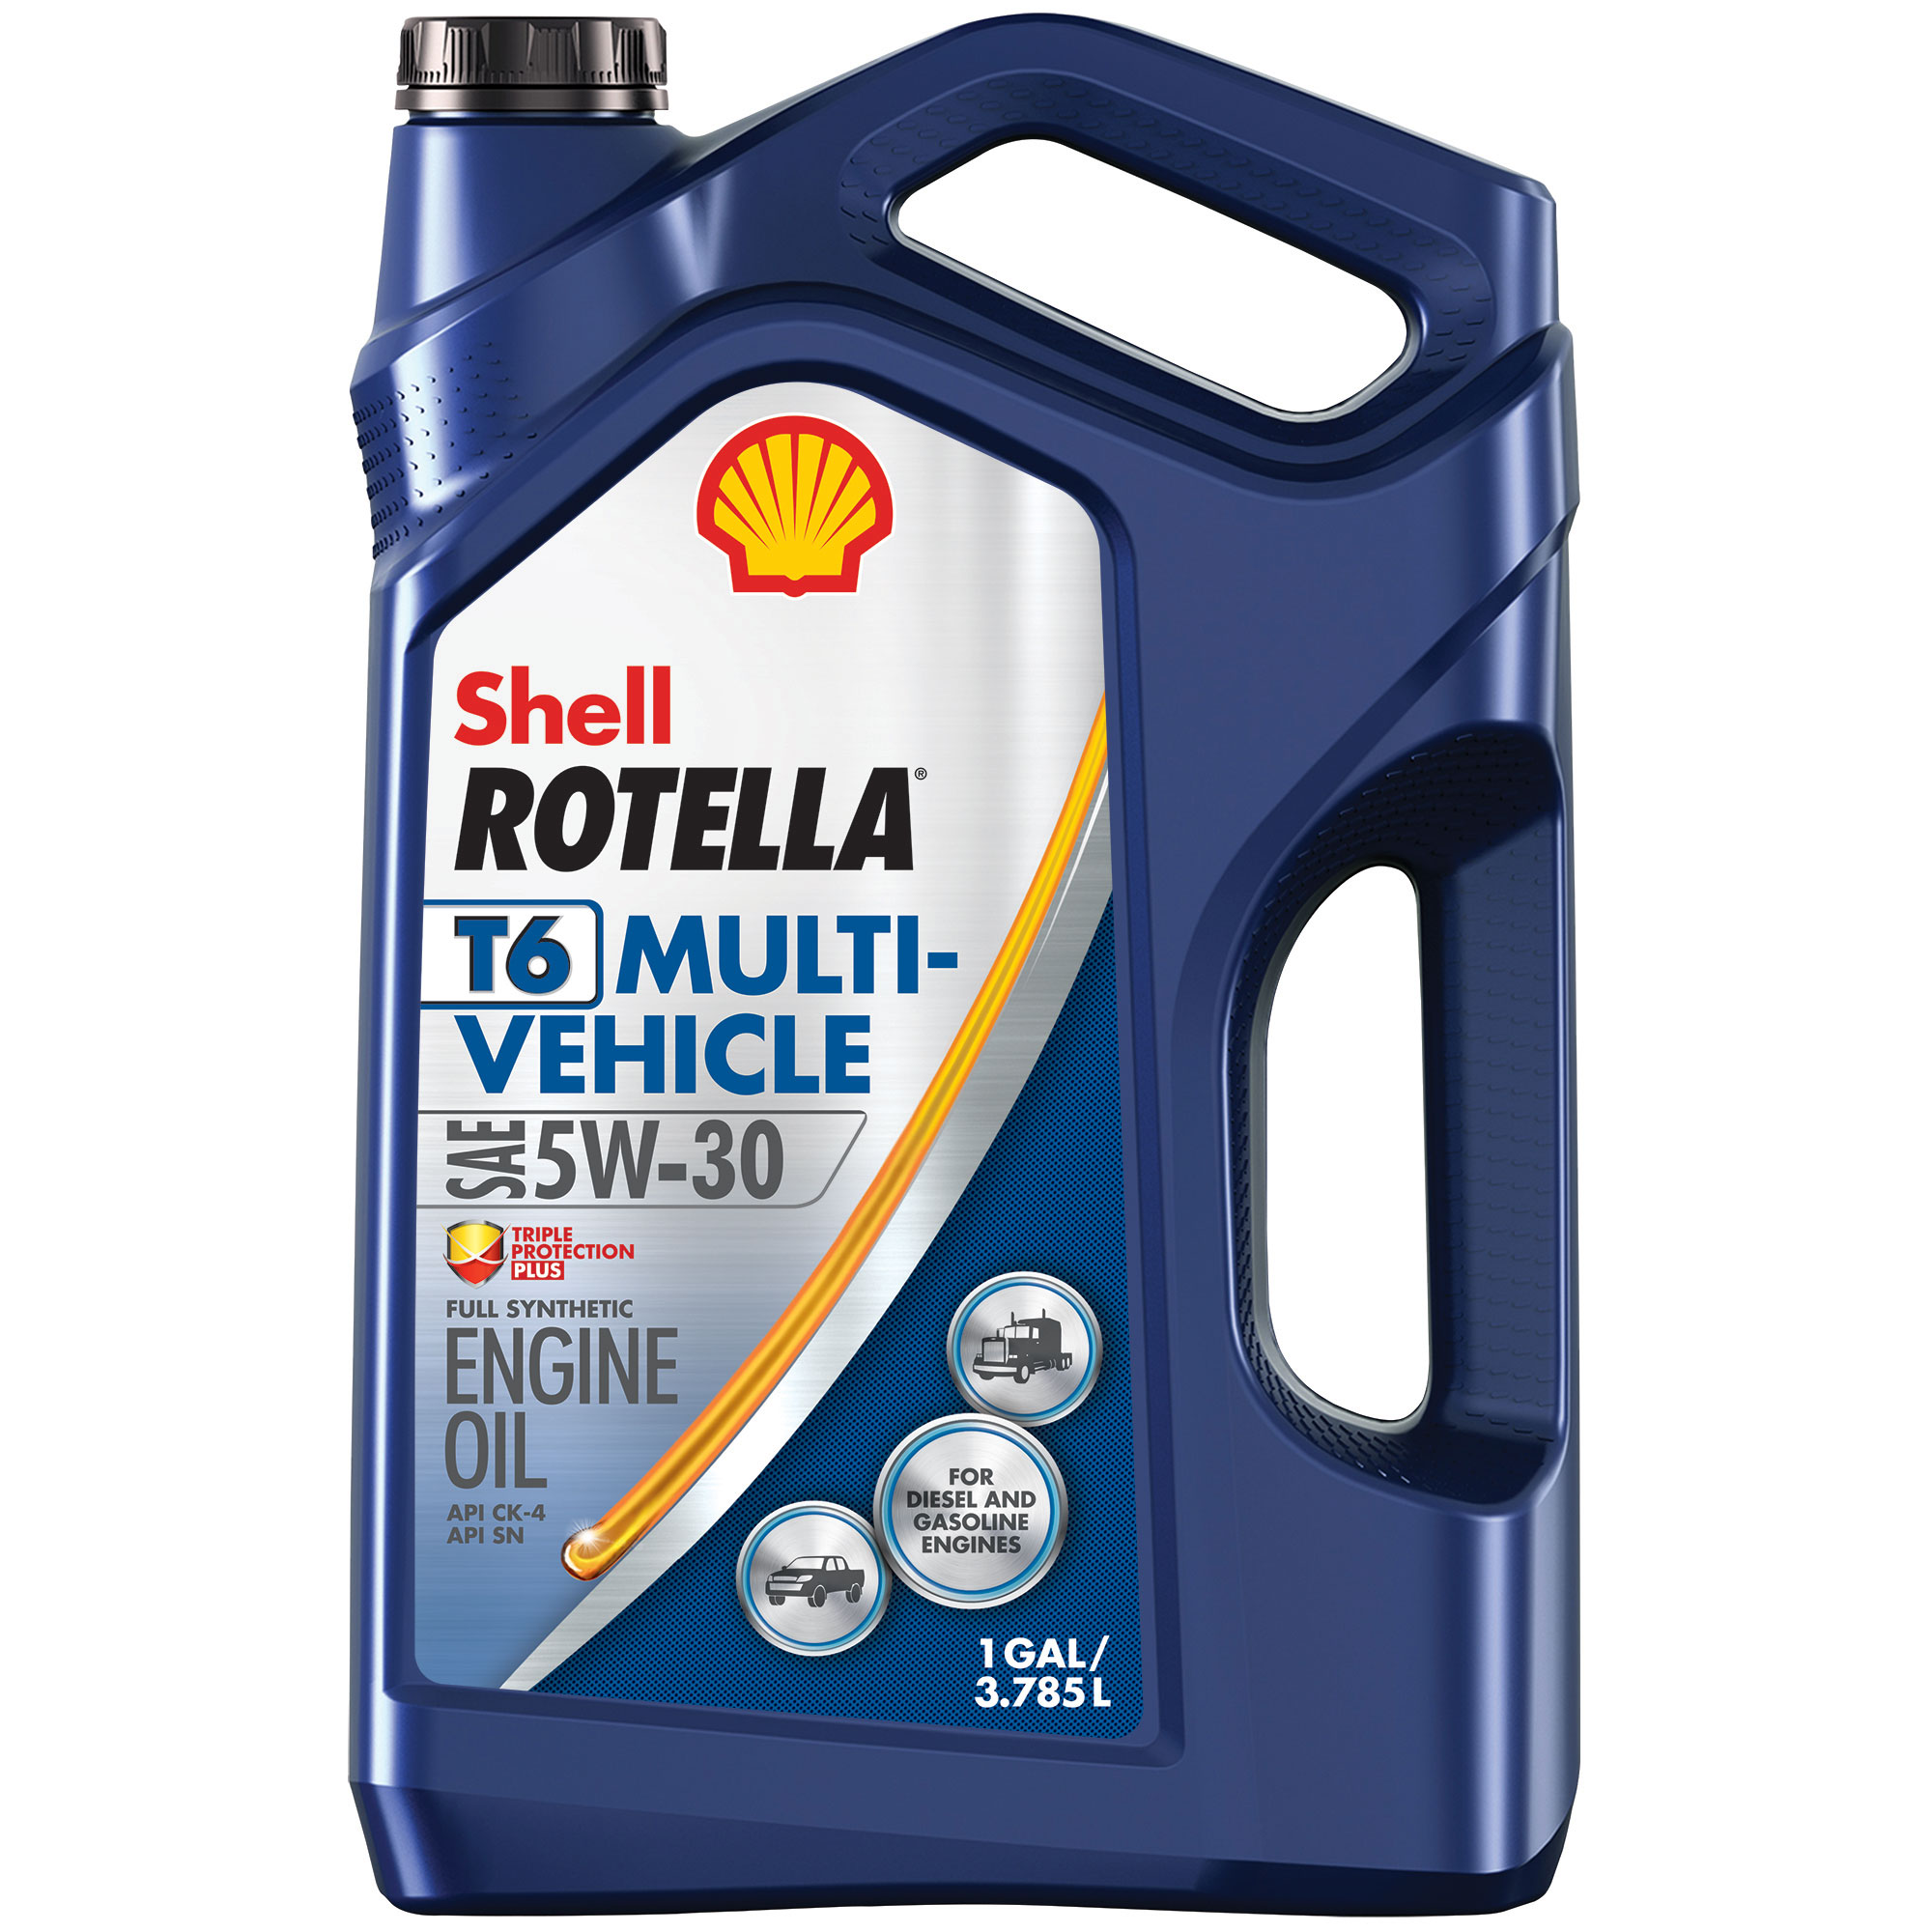 Shell Rotella T6 Synthetic Diesel Motor Oil 5W-40 CJ-4